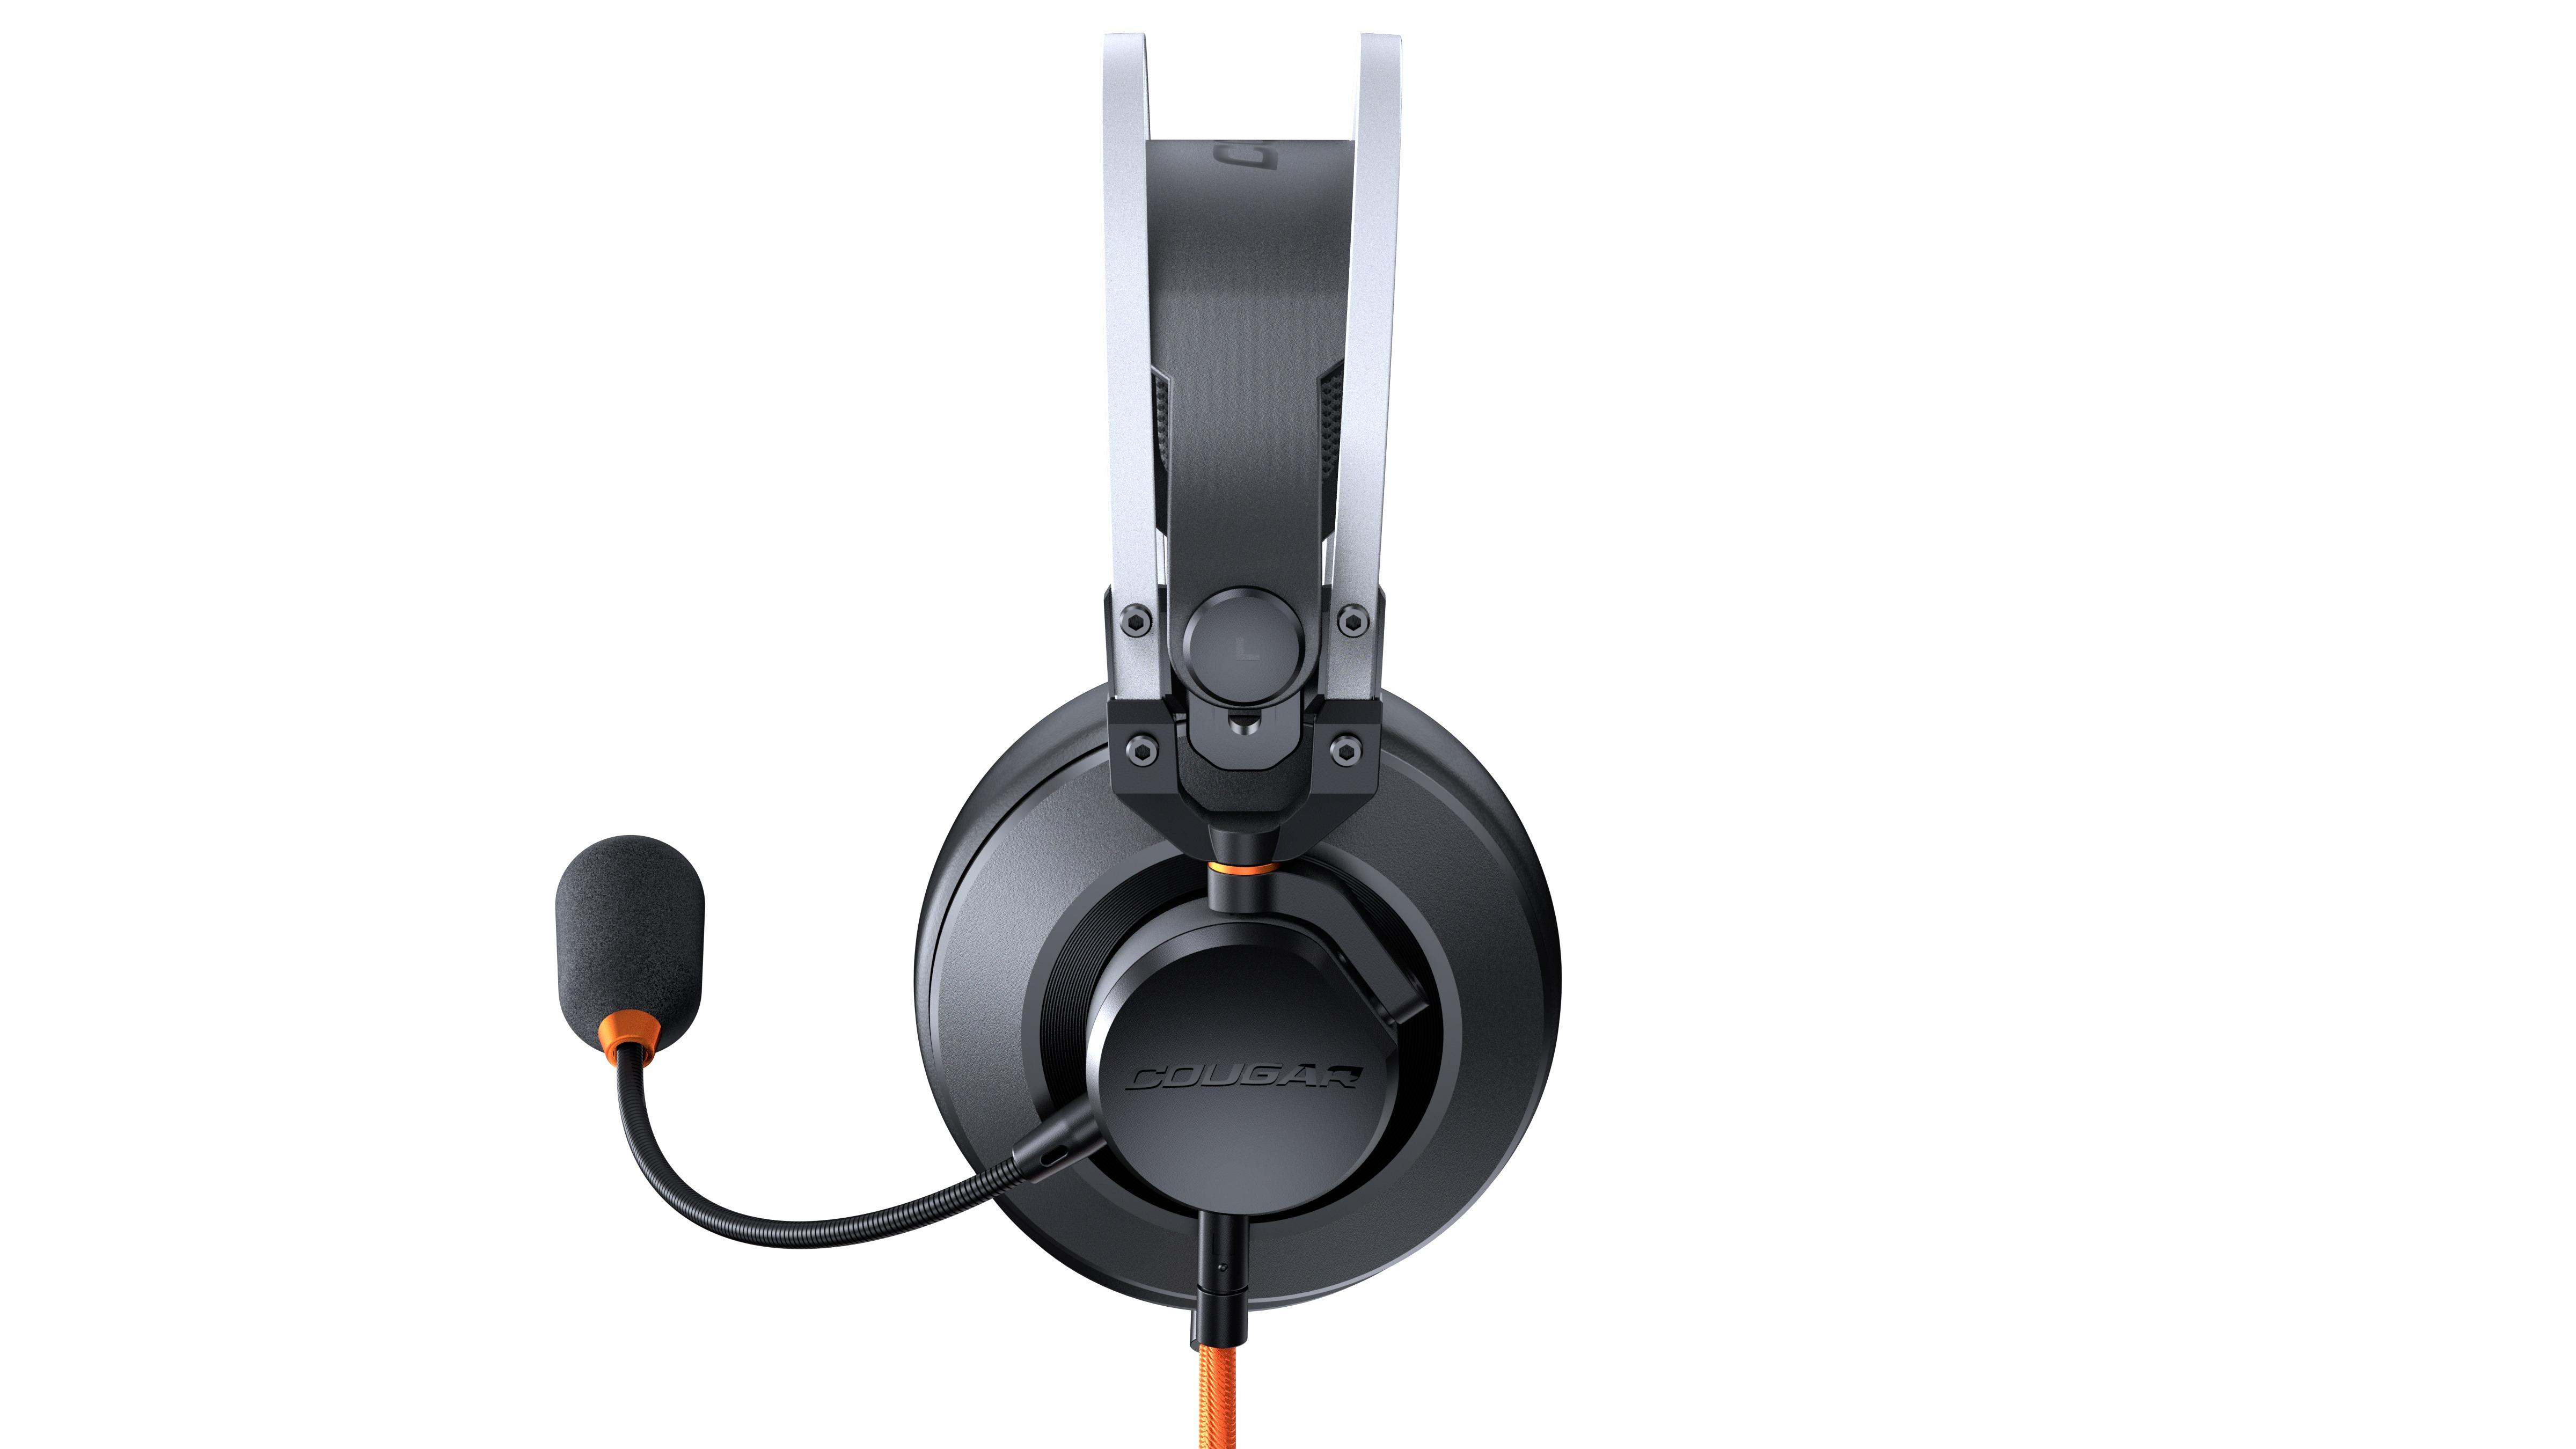 COUGAR VM410 TOURNAMENT, Over-ear schwarz-orange Gaming Headset